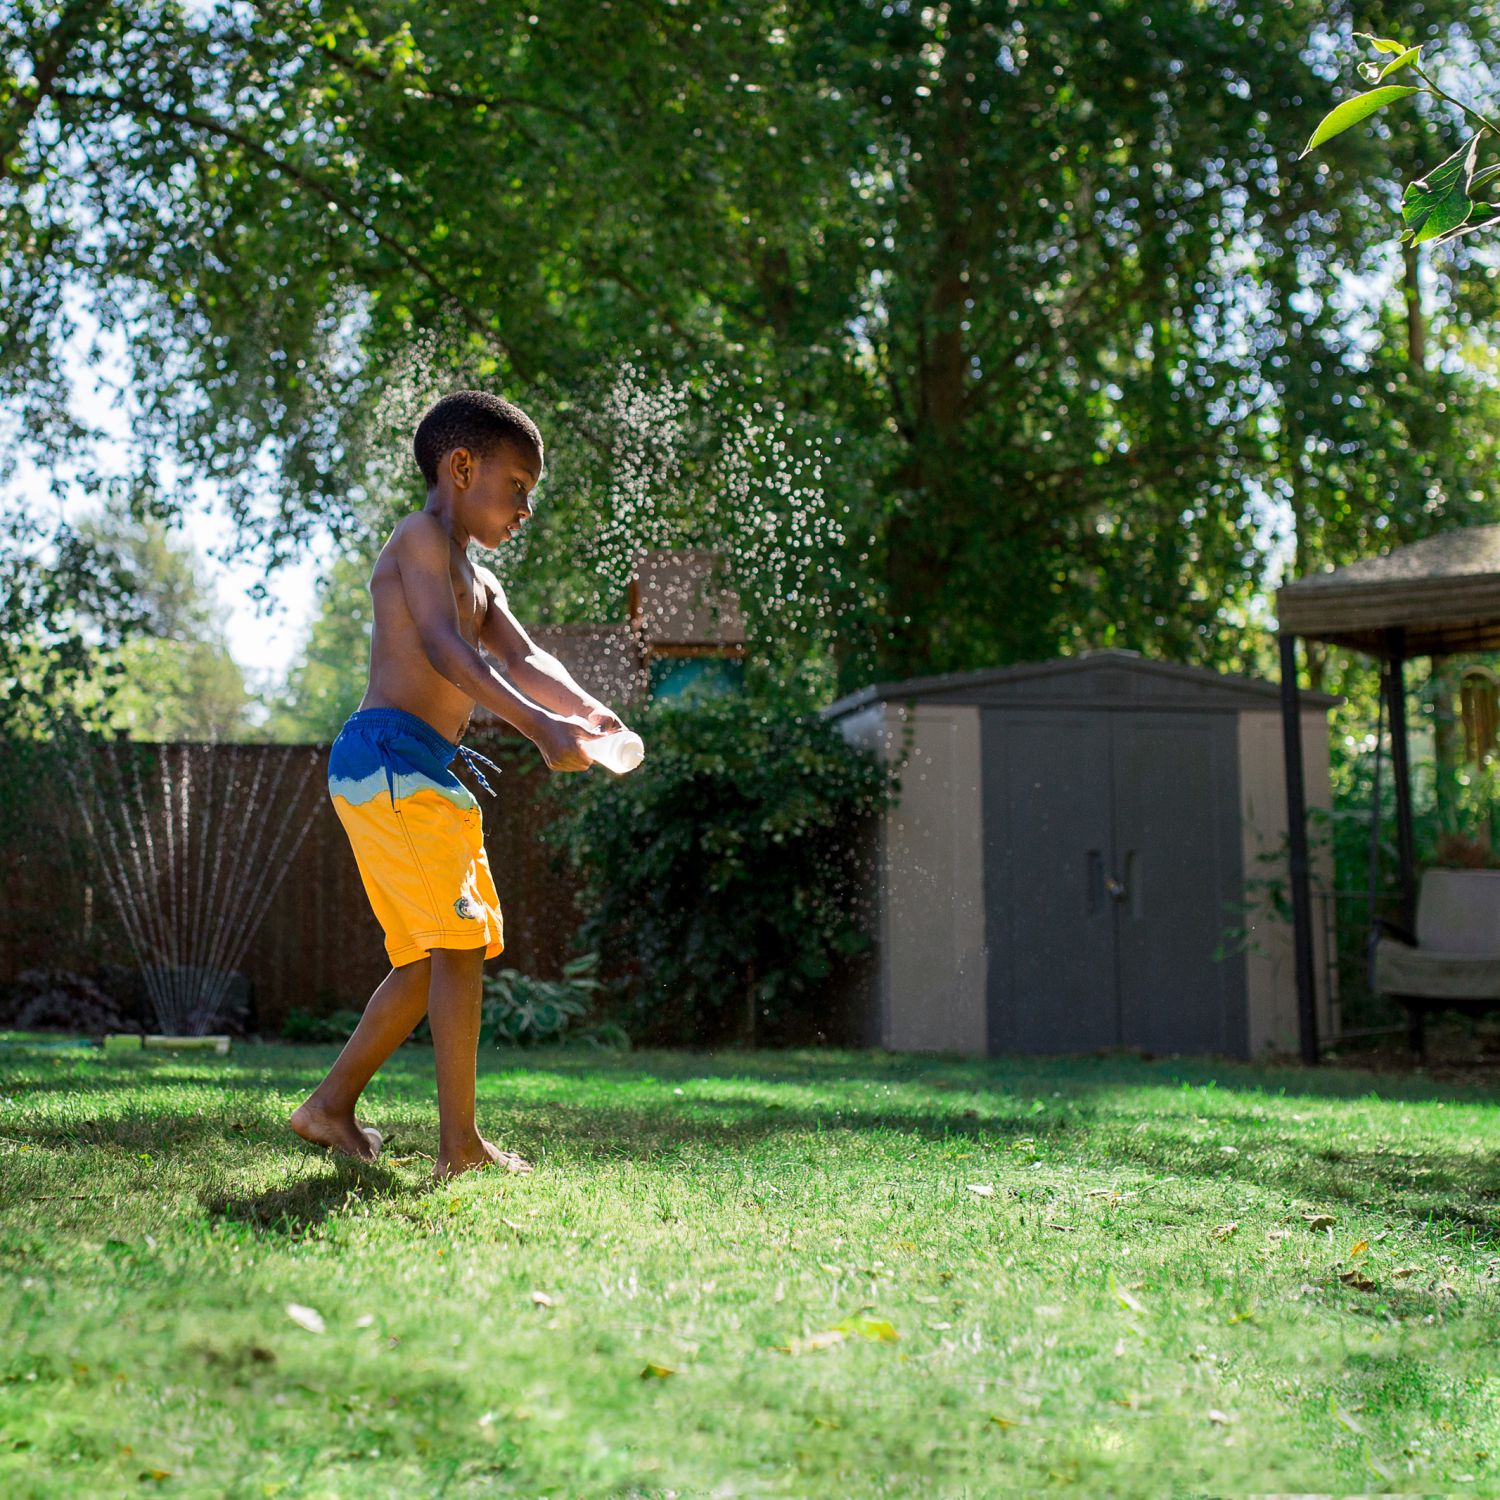 Boy playing a back yard sprinkler in summer